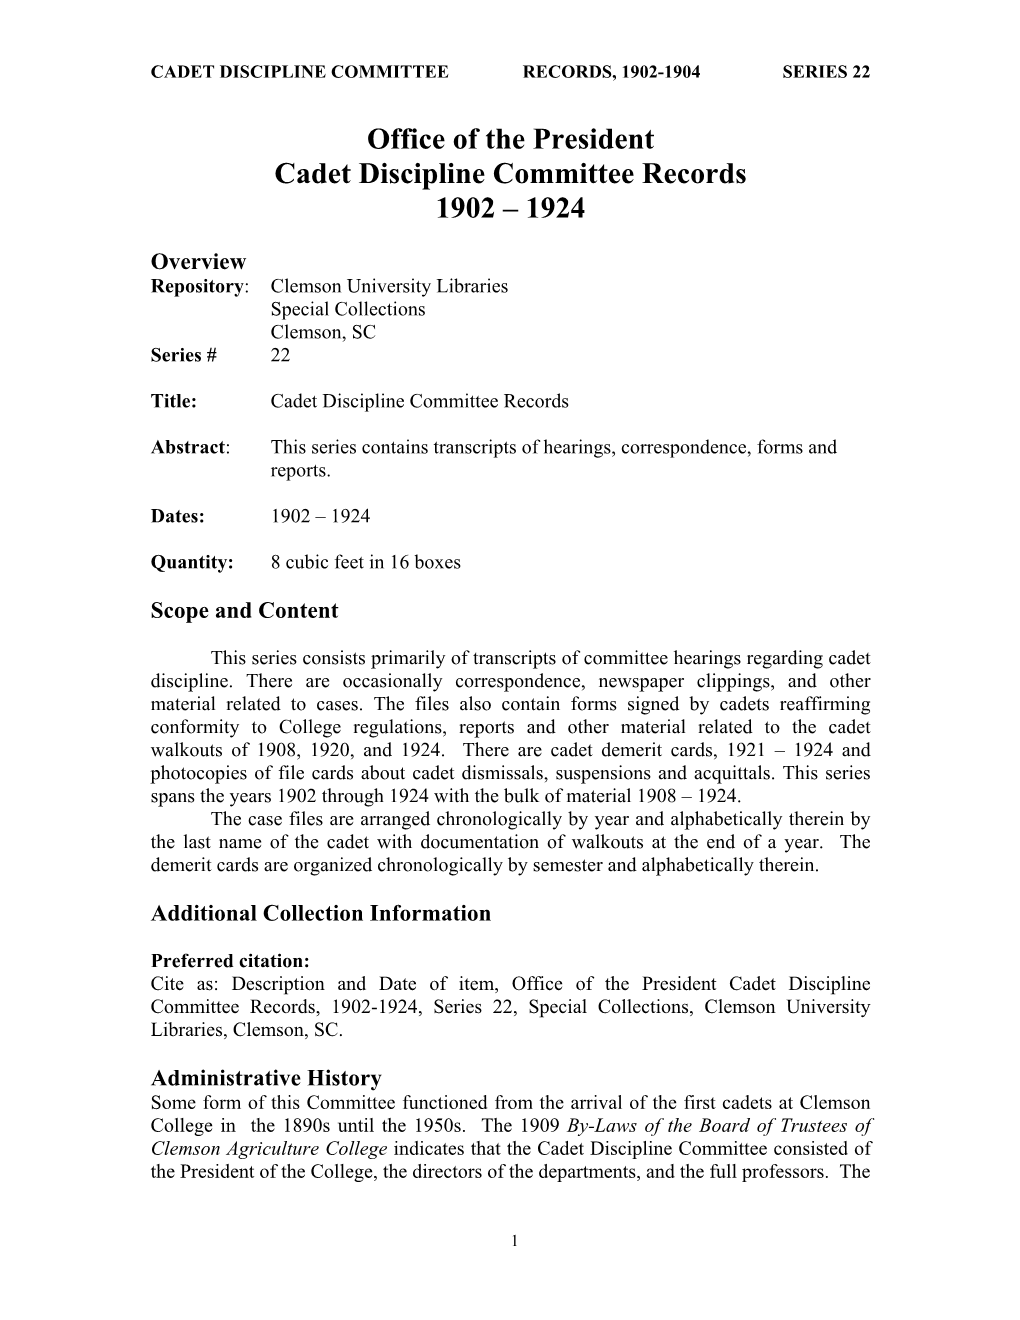 Cadet Discipline Files, 1902-1924, Series 22